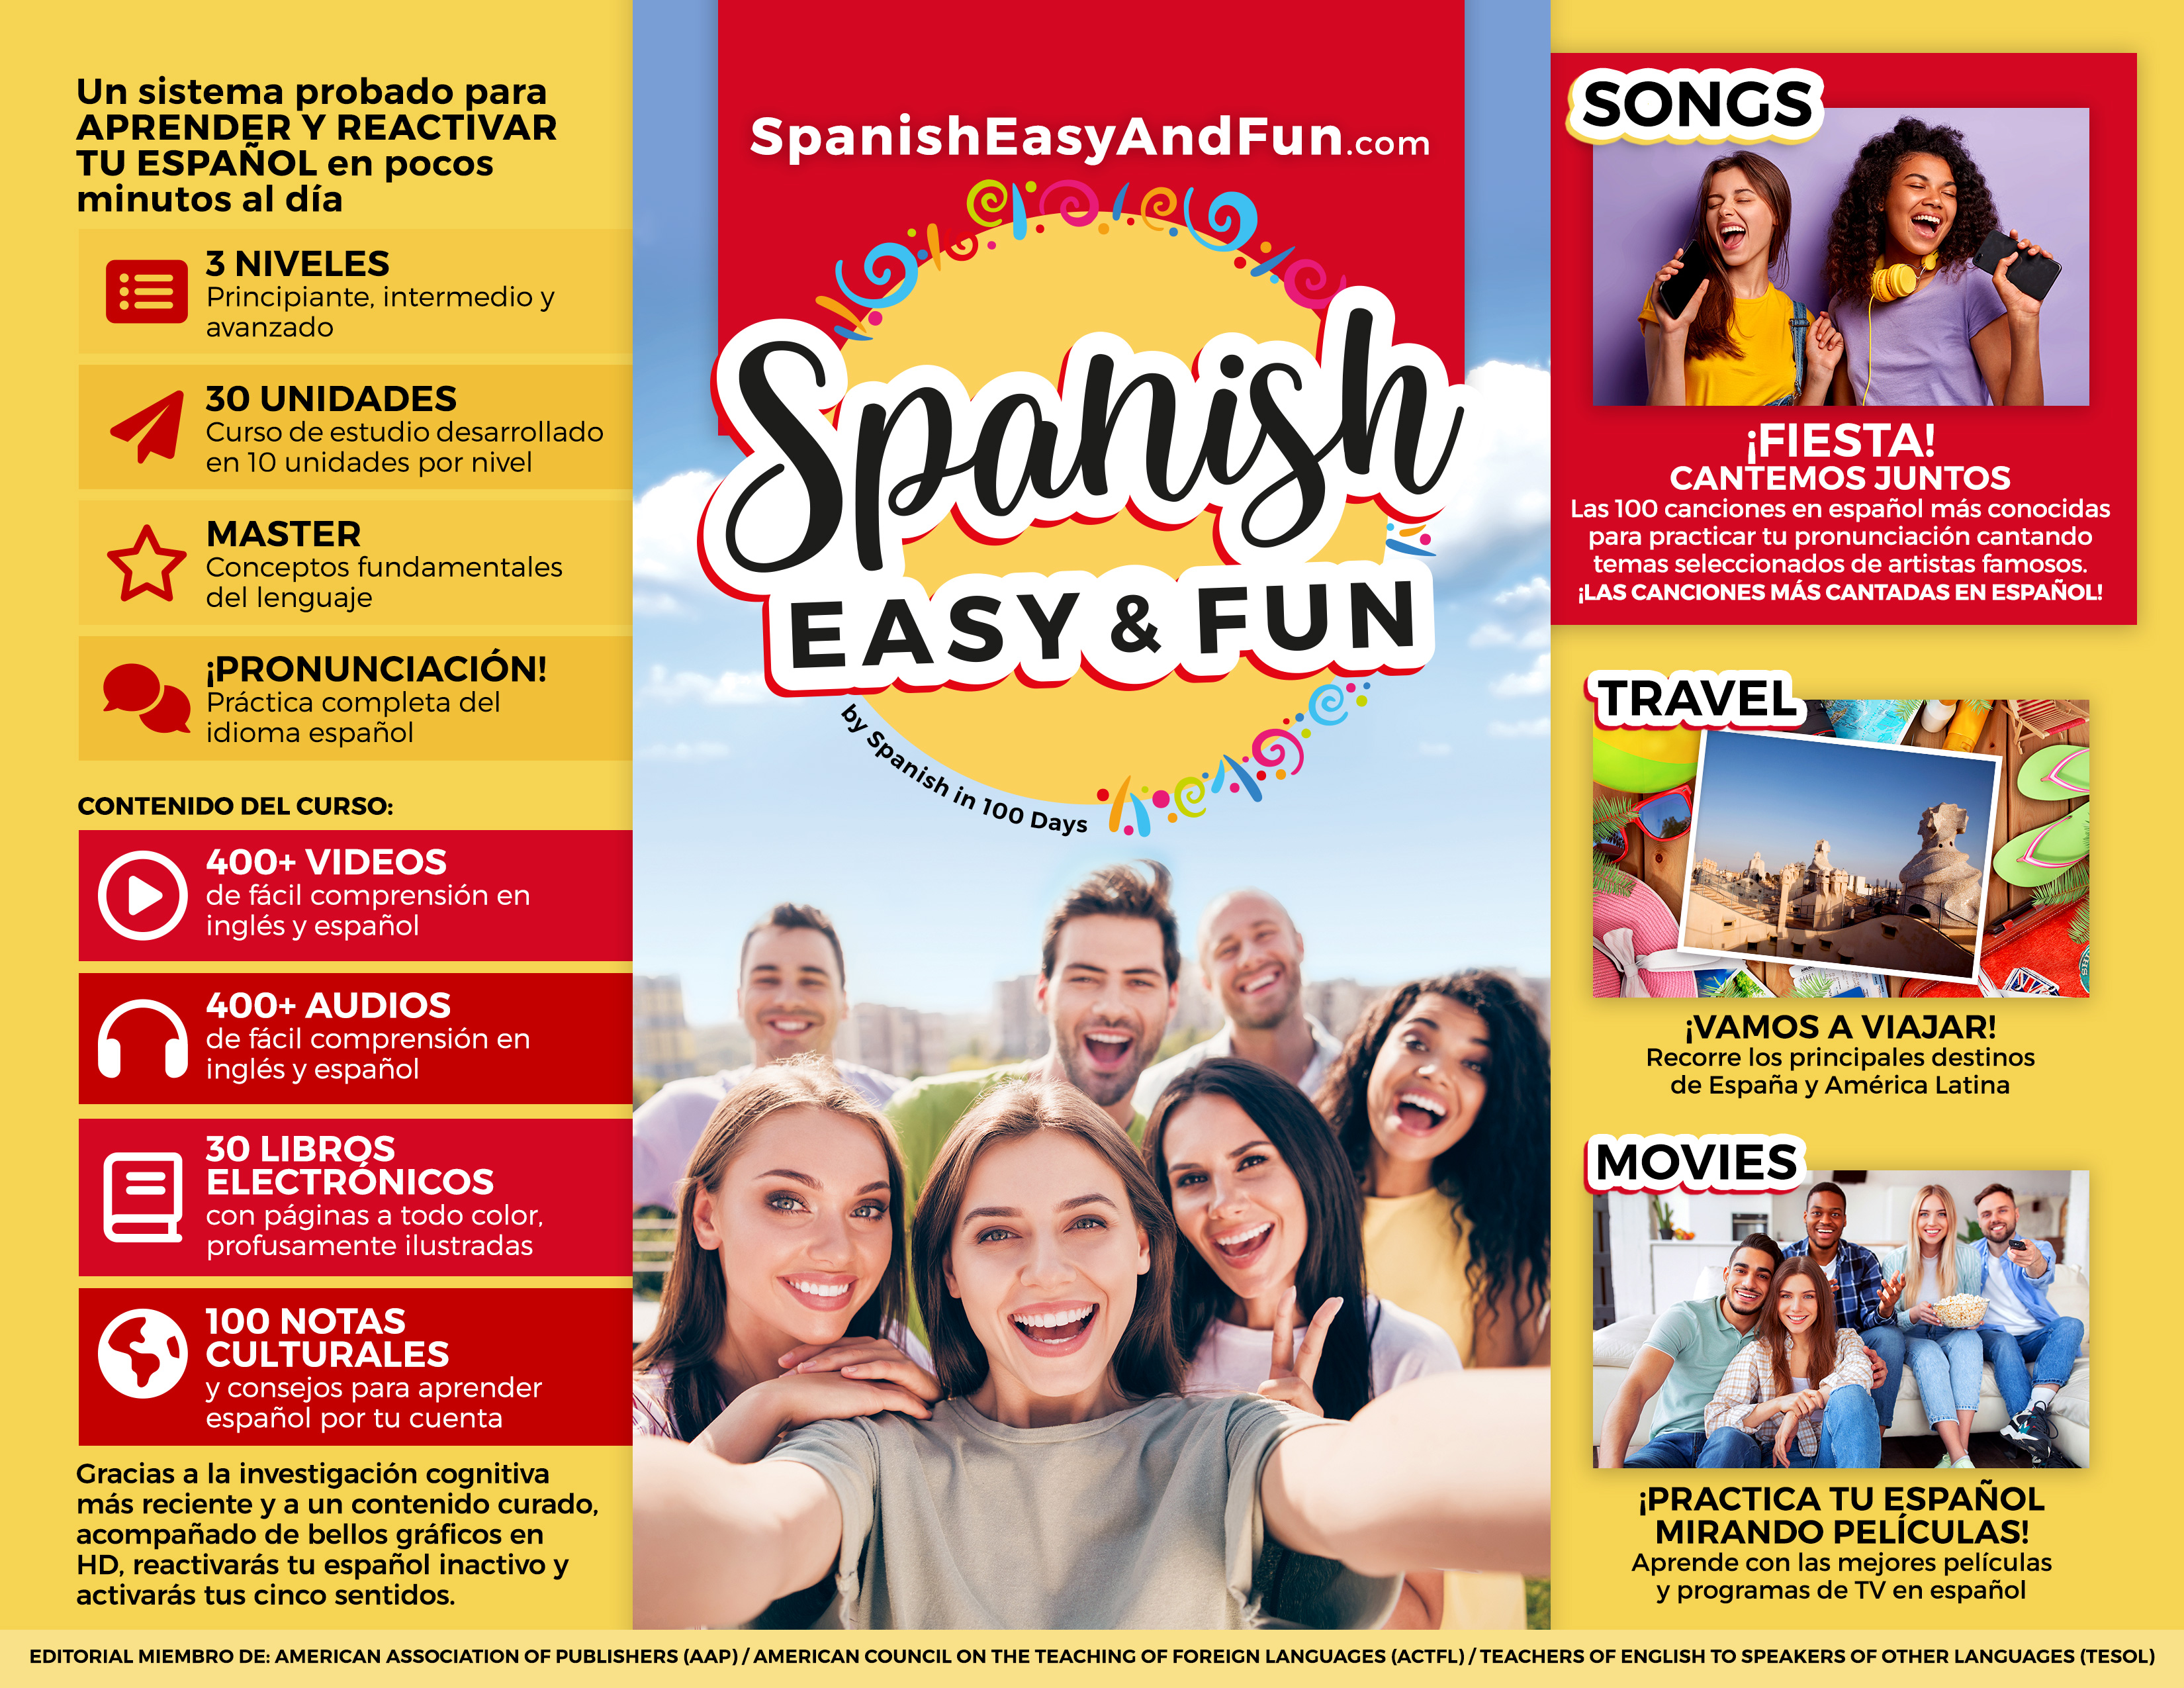 SPANISH: EASY & FUN